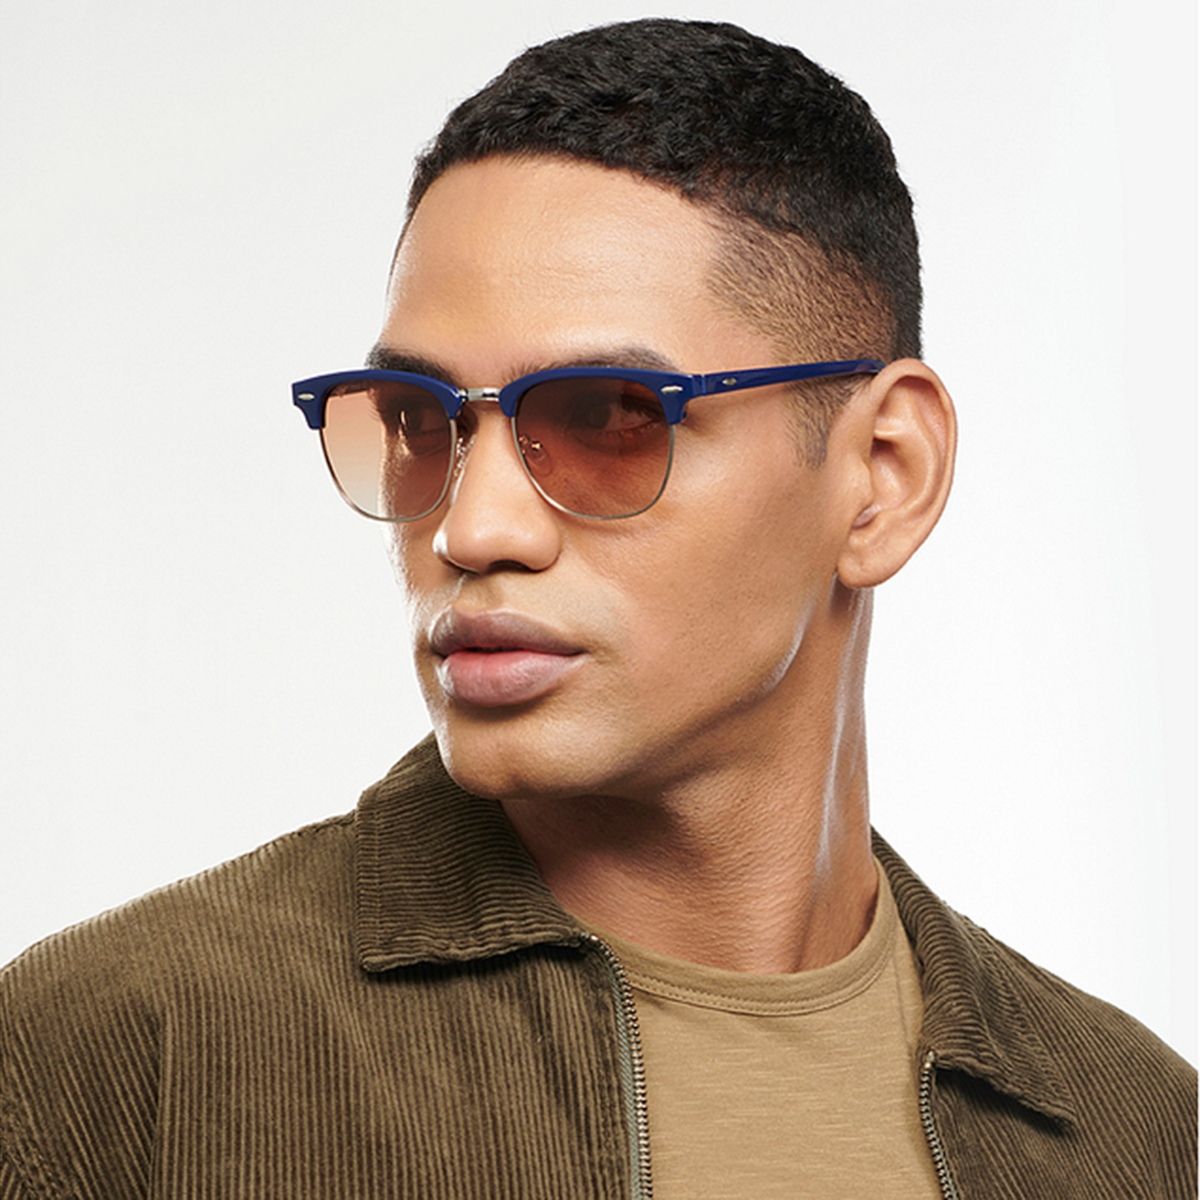 Buy Clubmaster Sunglasses - 2 Sunglasses @999 - Woggles